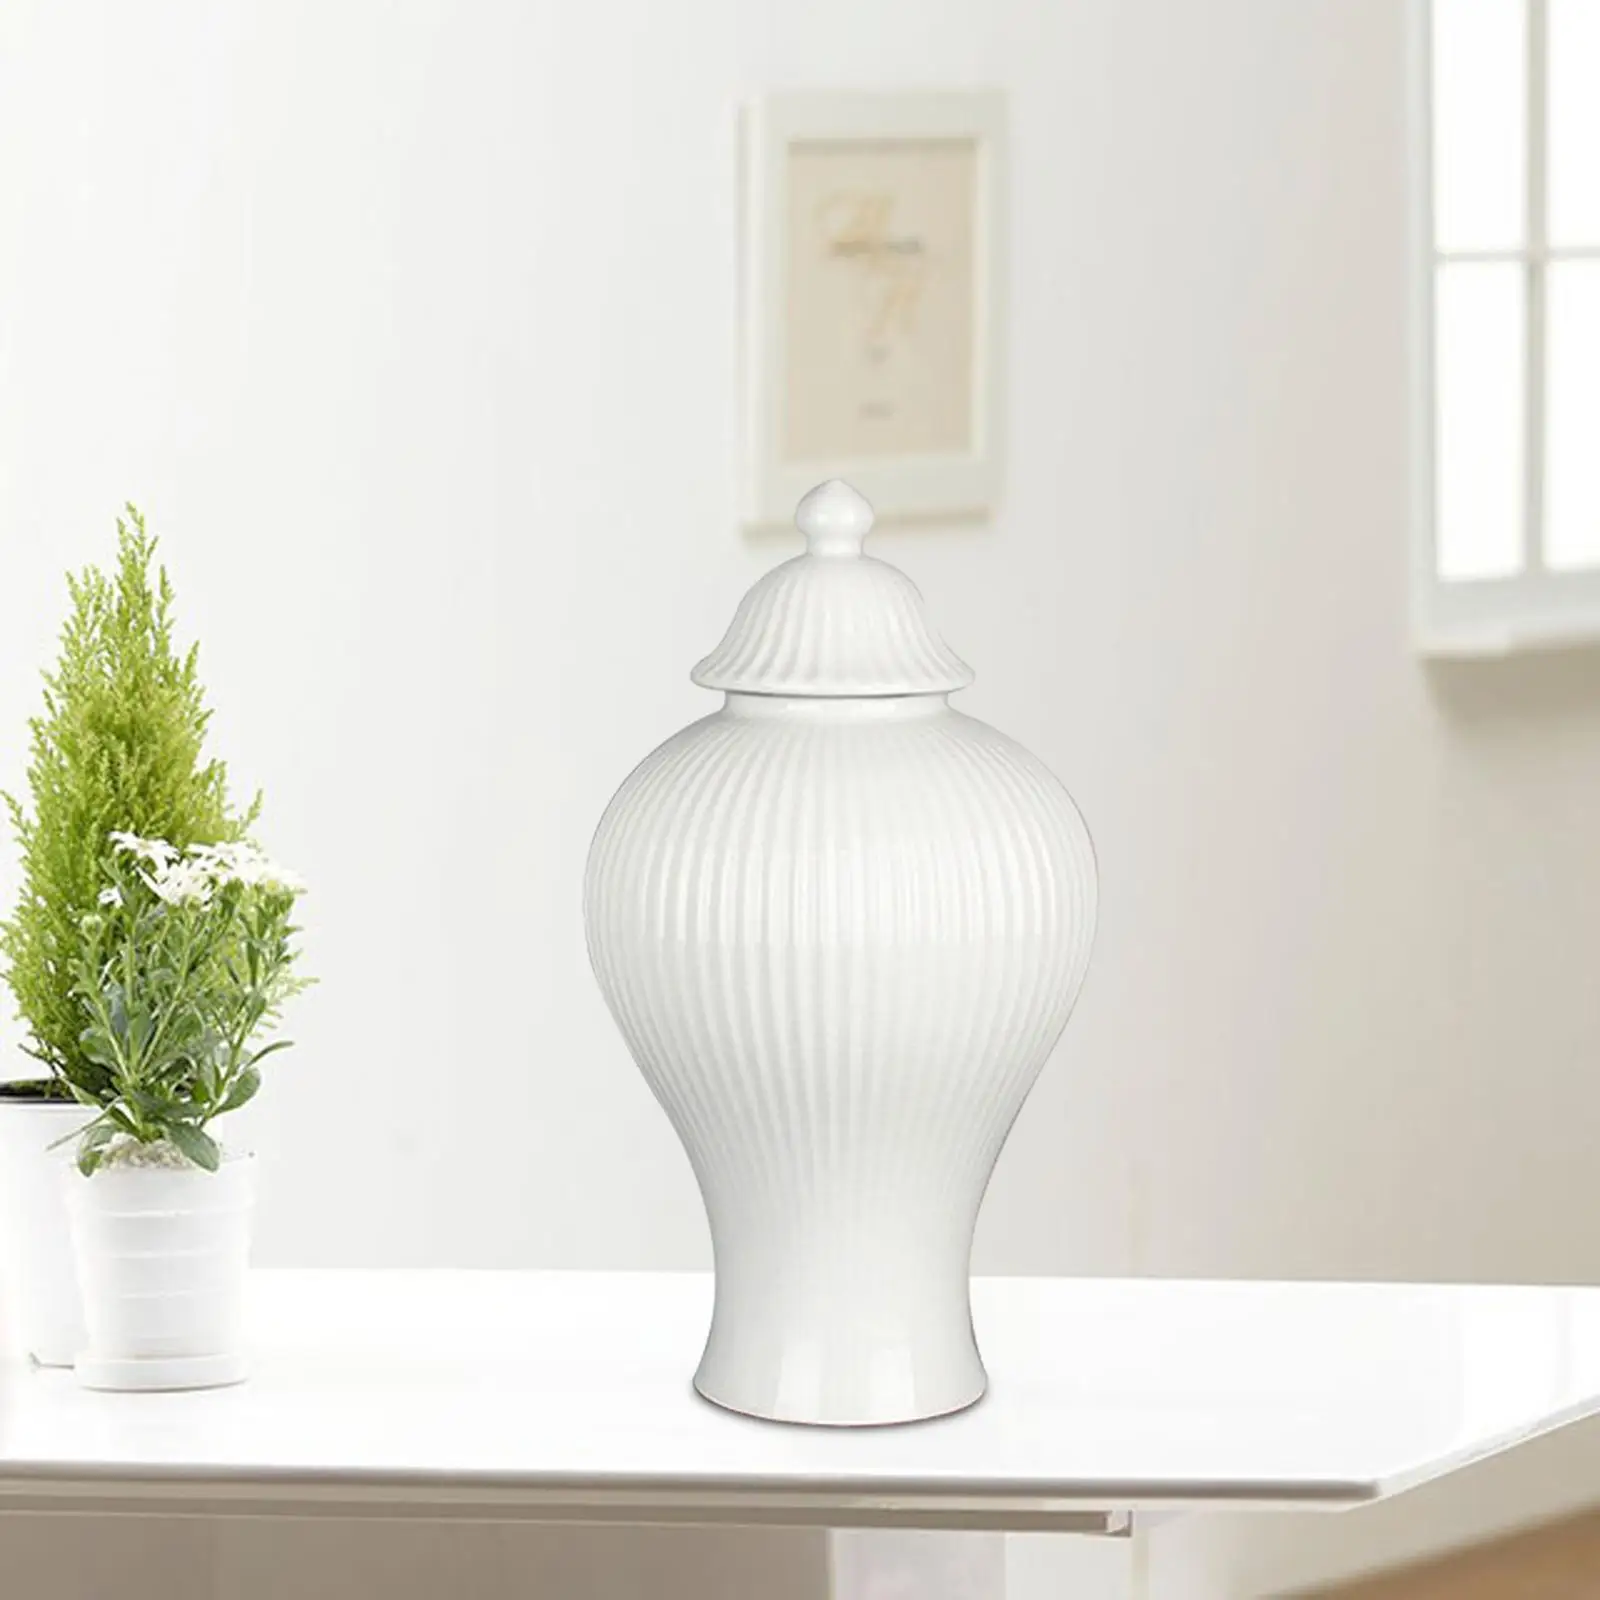 Ceramic Ginger Jar Decorative Jar with Lid Vase Table Centerpiece